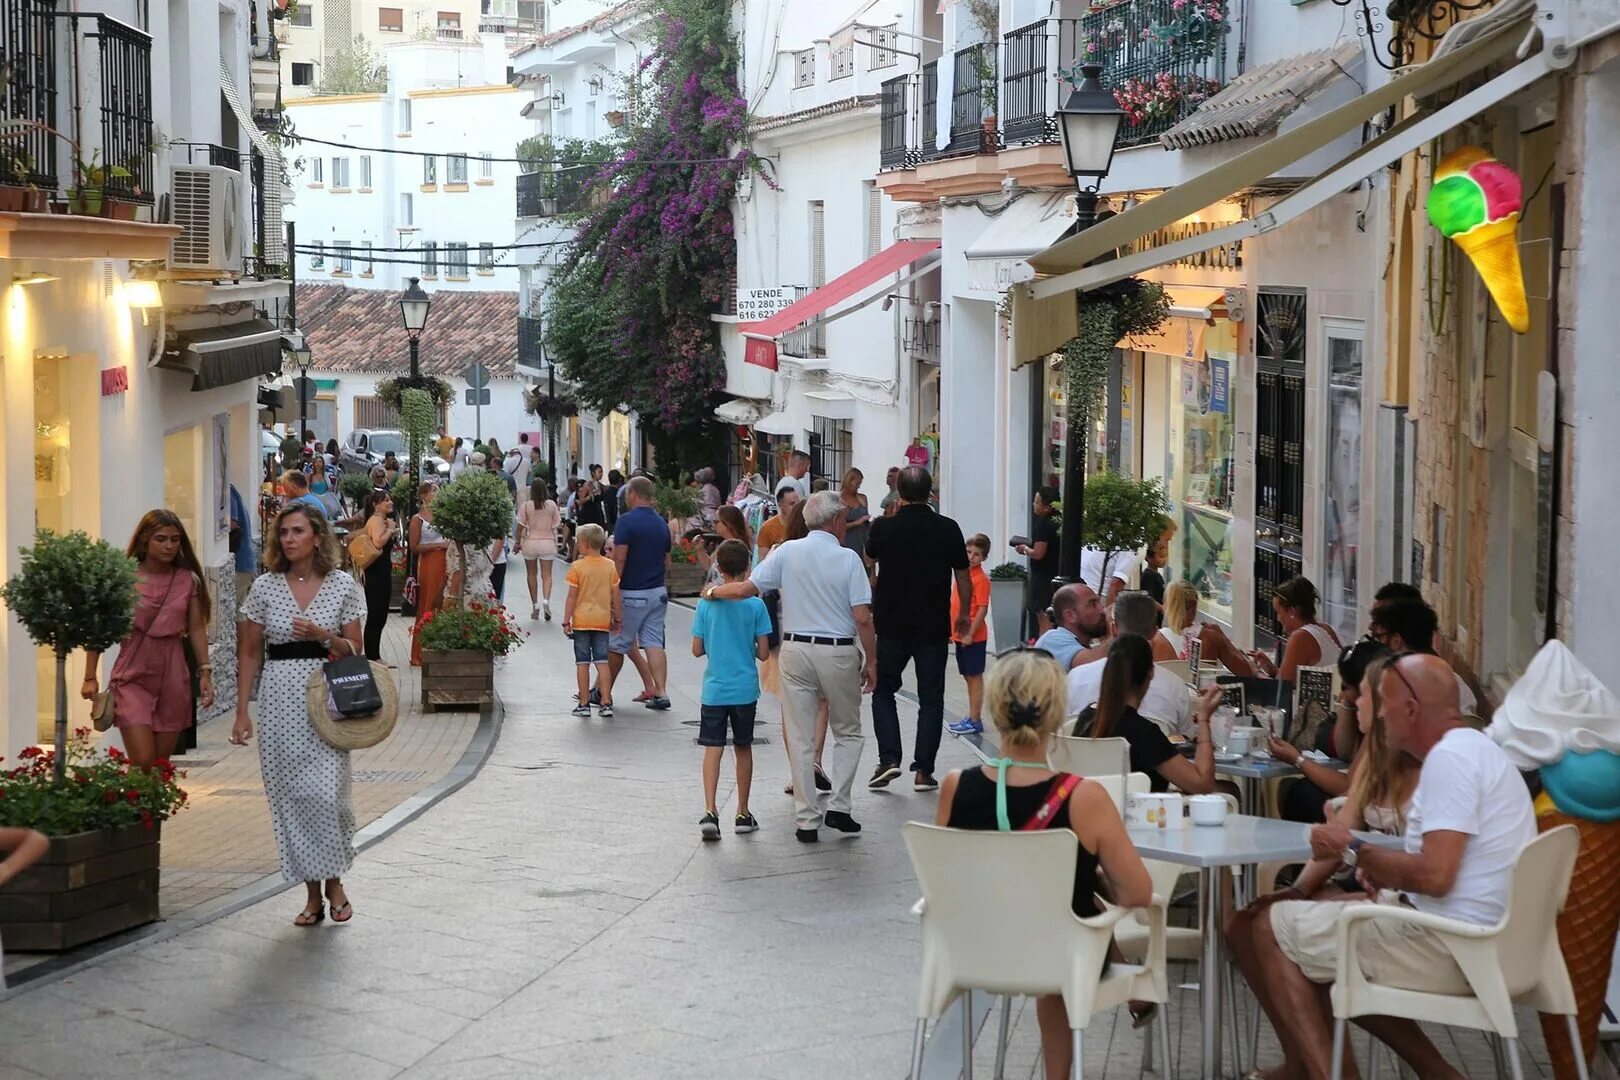 La el pais. Жизнь в Испании. Испания люди на улице. Туристы в Испании. Жители Италии.